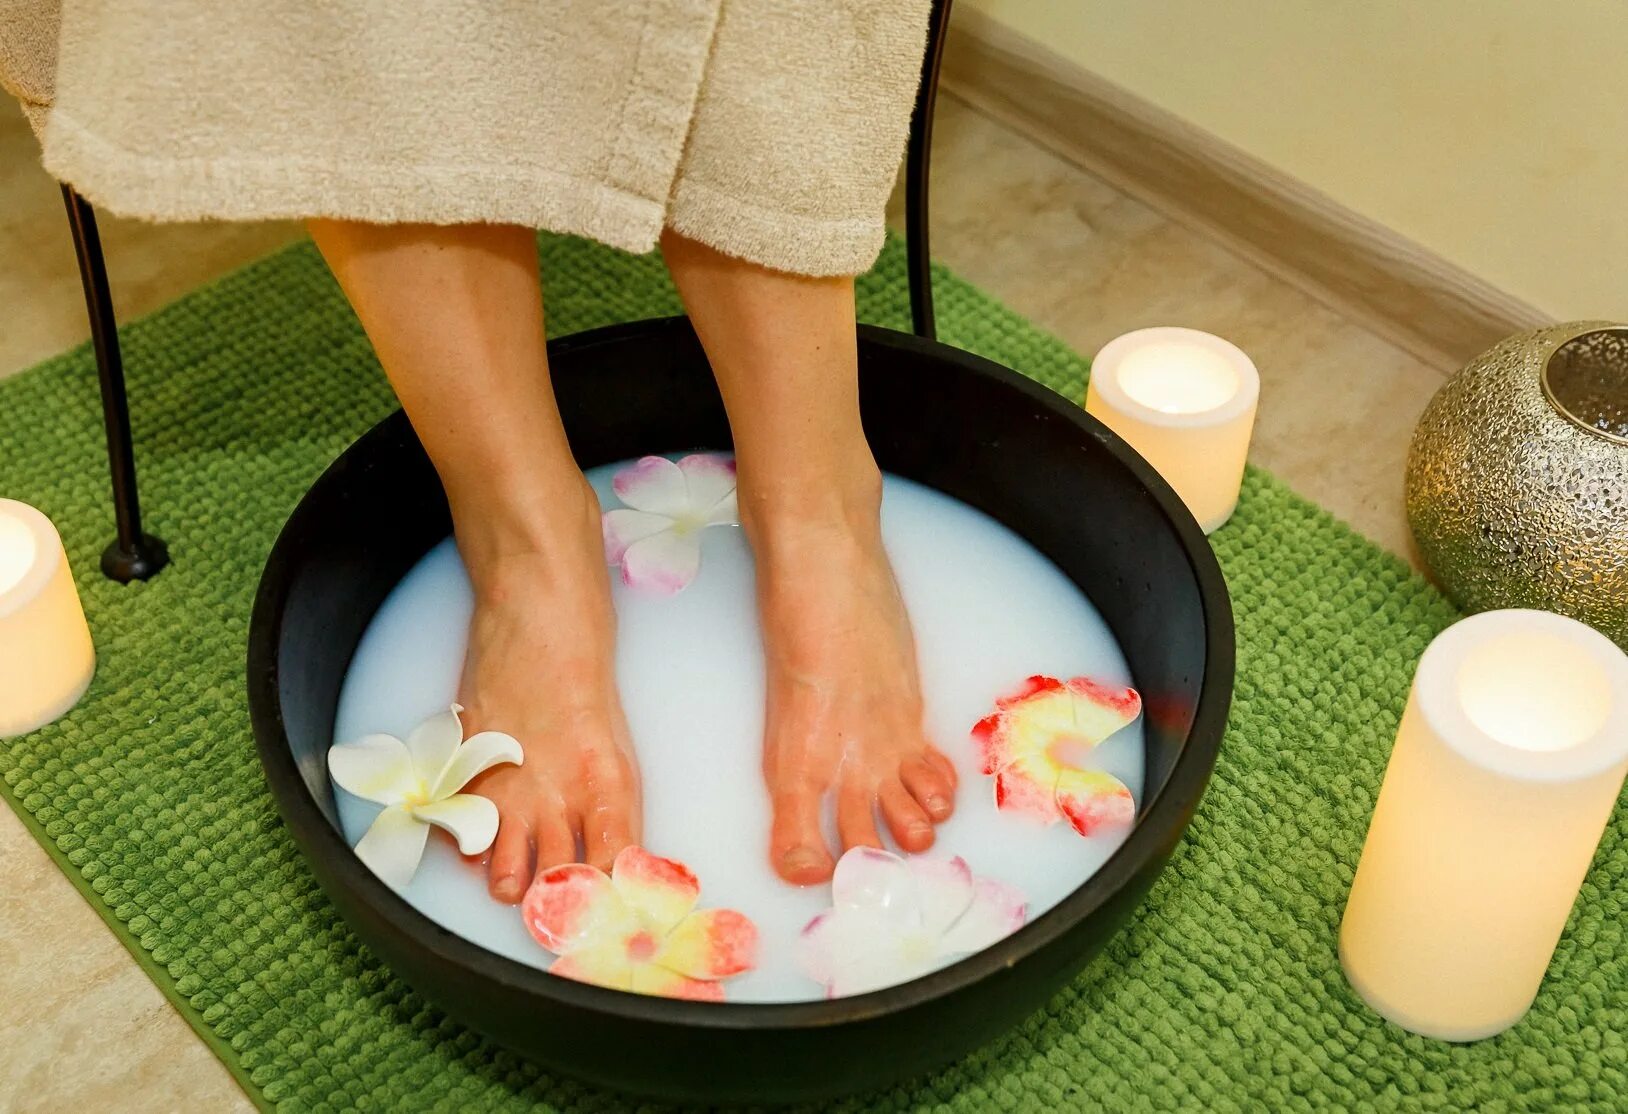 Санаторий Альфа Радон. Ванночка для ног. Ванночка для ног спа. Молочная ванночка для ног.